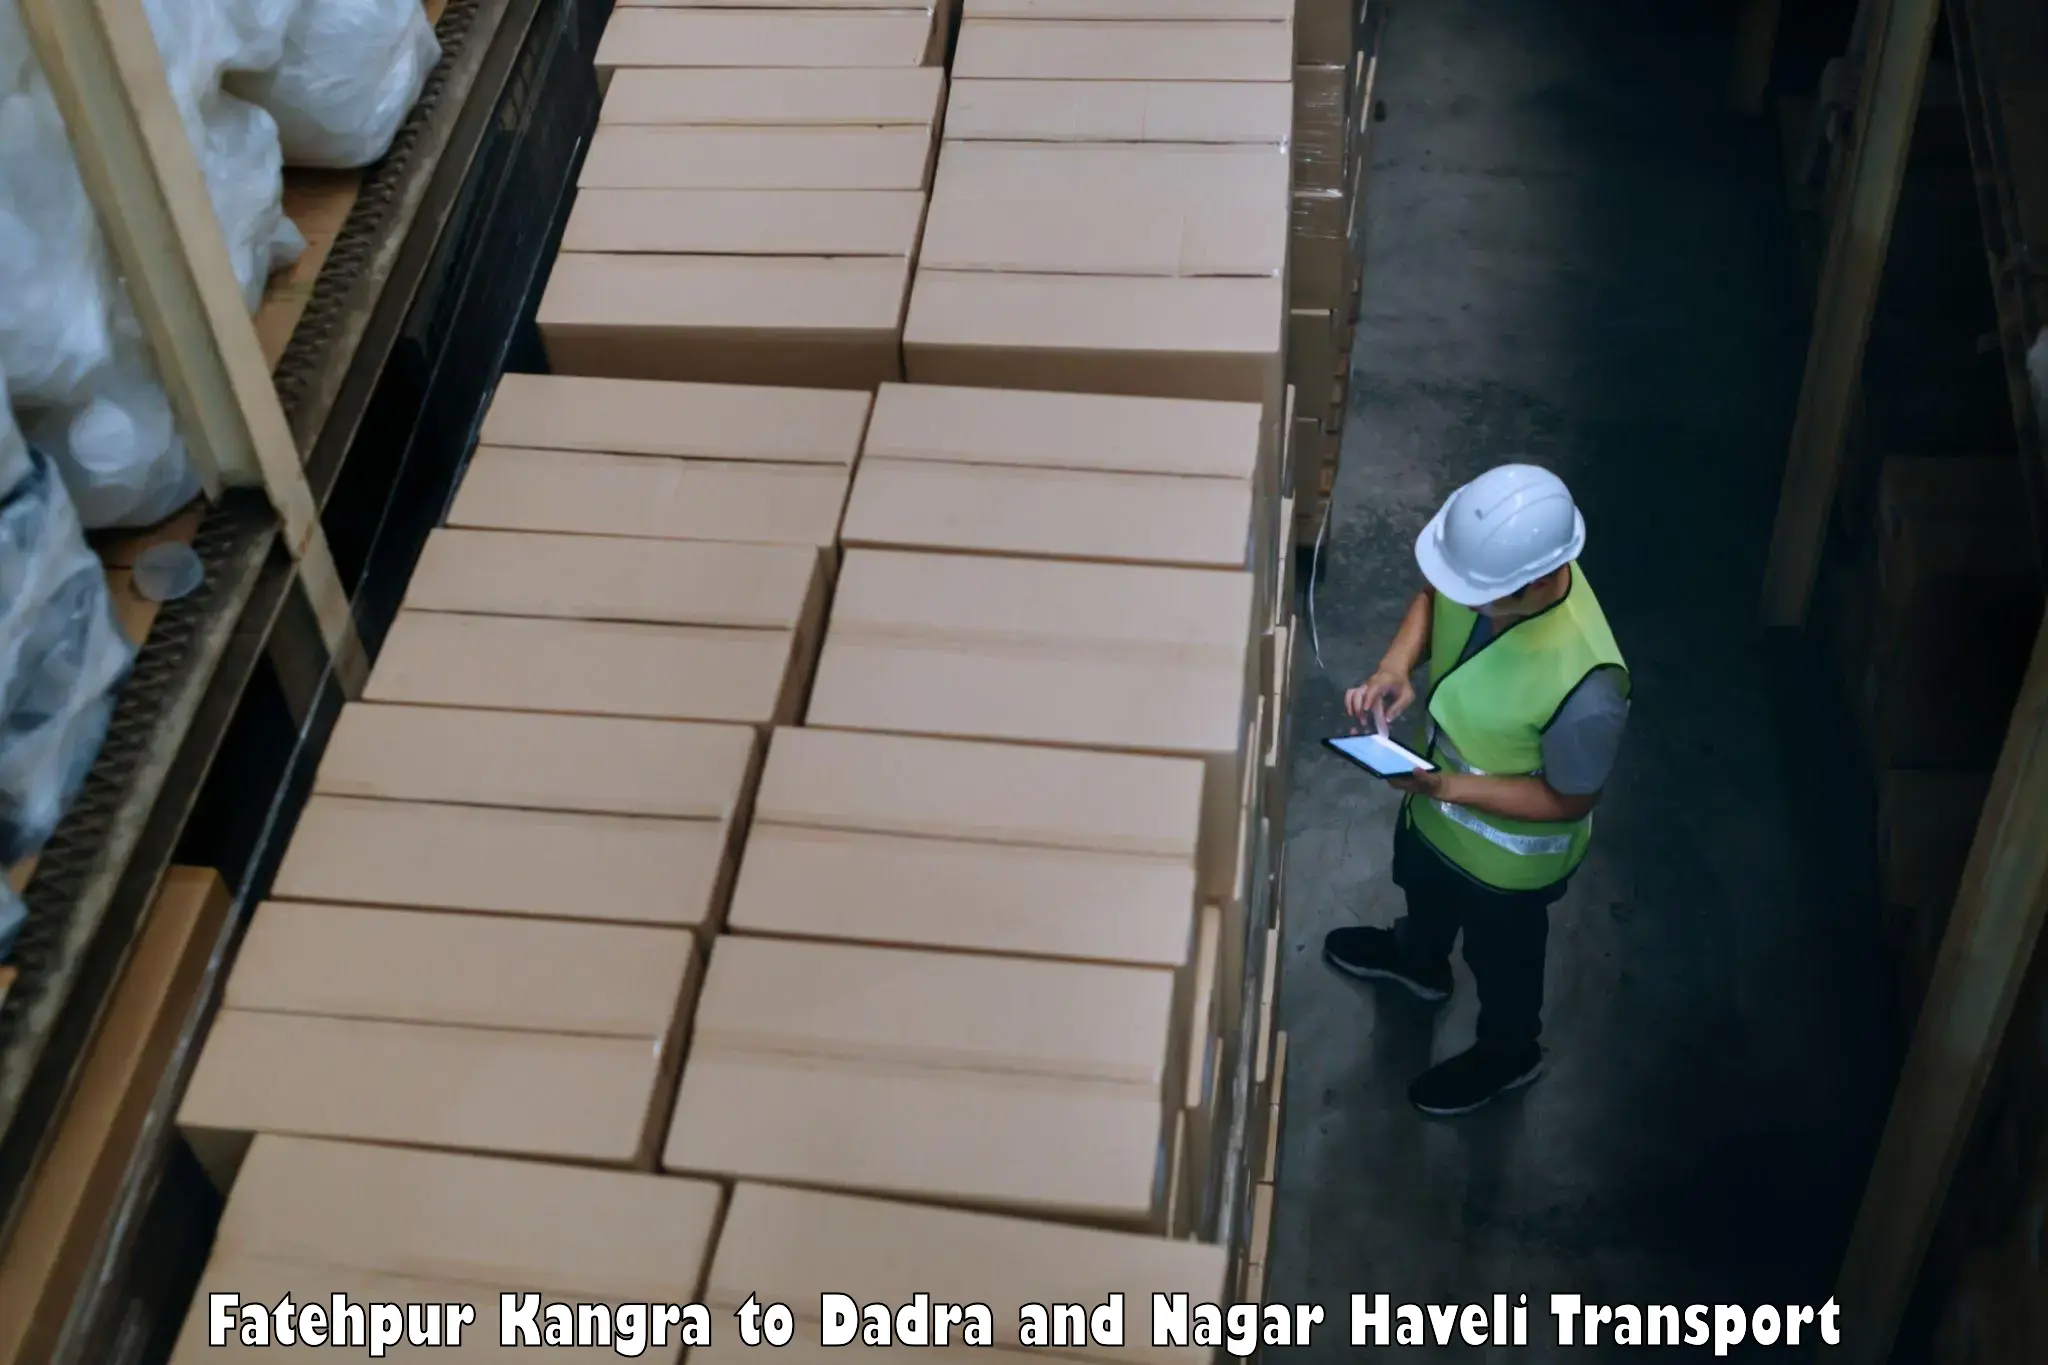 Truck transport companies in India Fatehpur Kangra to Dadra and Nagar Haveli